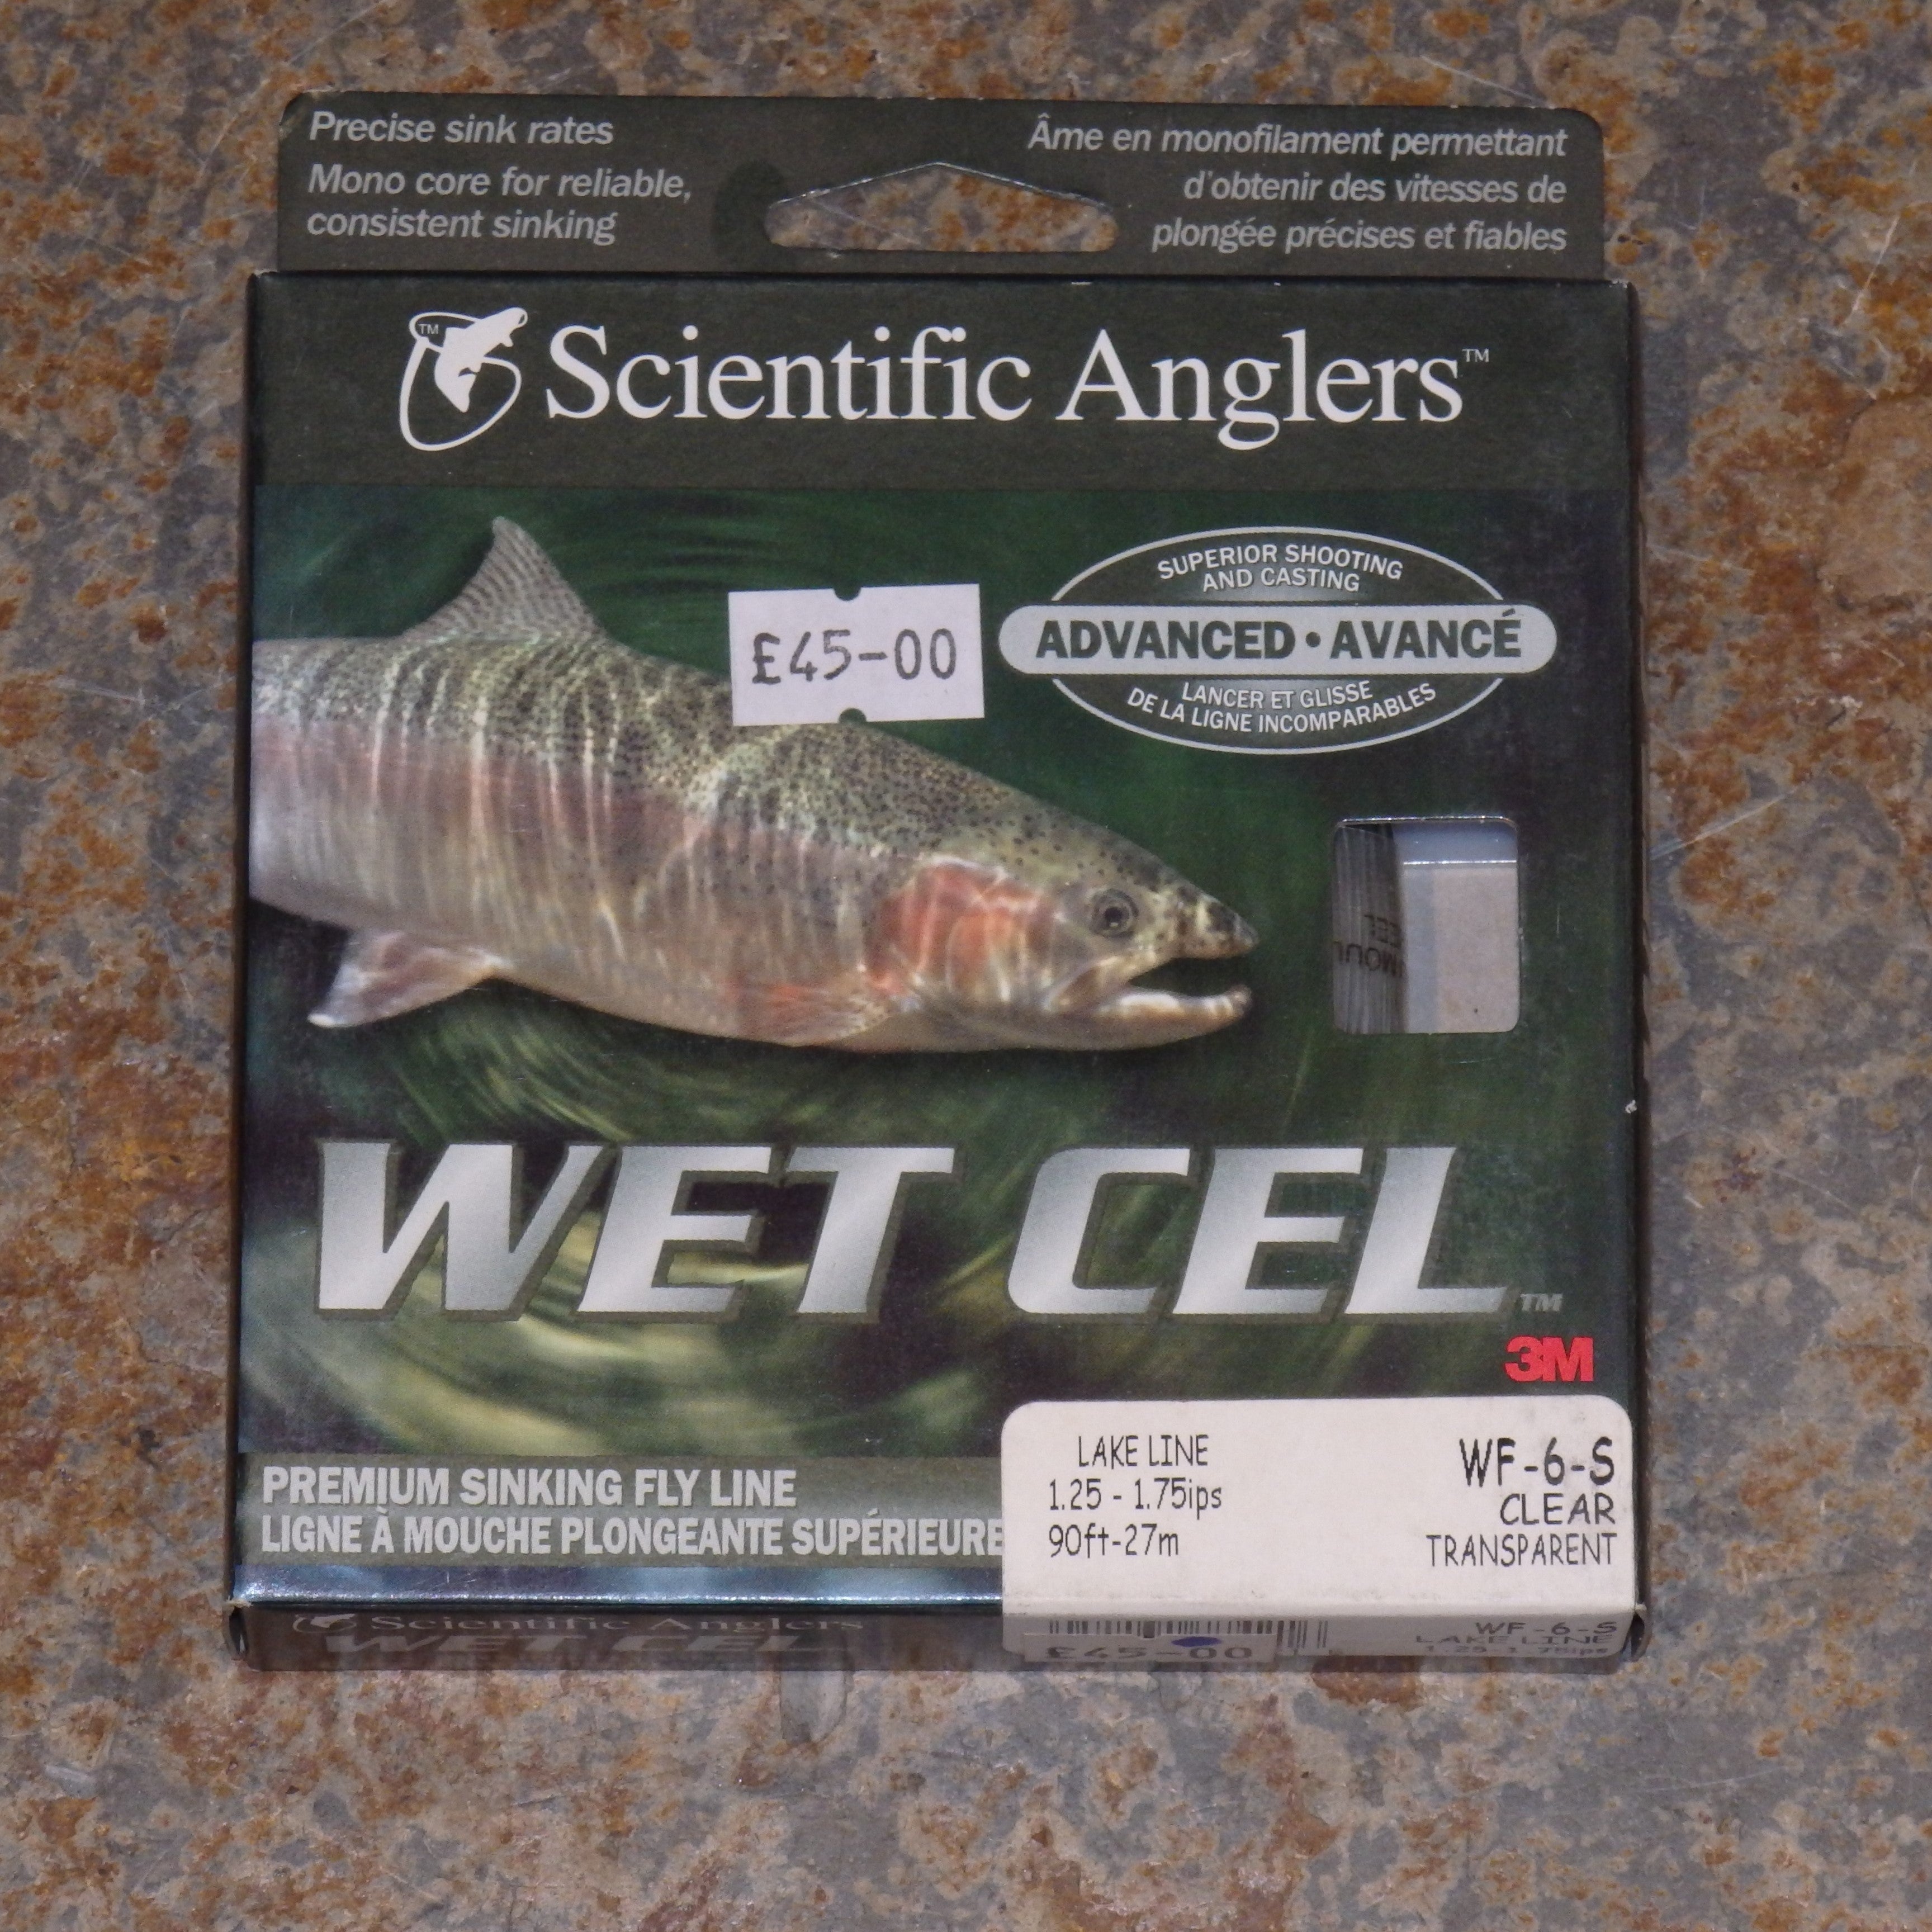 Scientific Anglers Wet Cel Lake line clear – KD Radcliffe Ltd